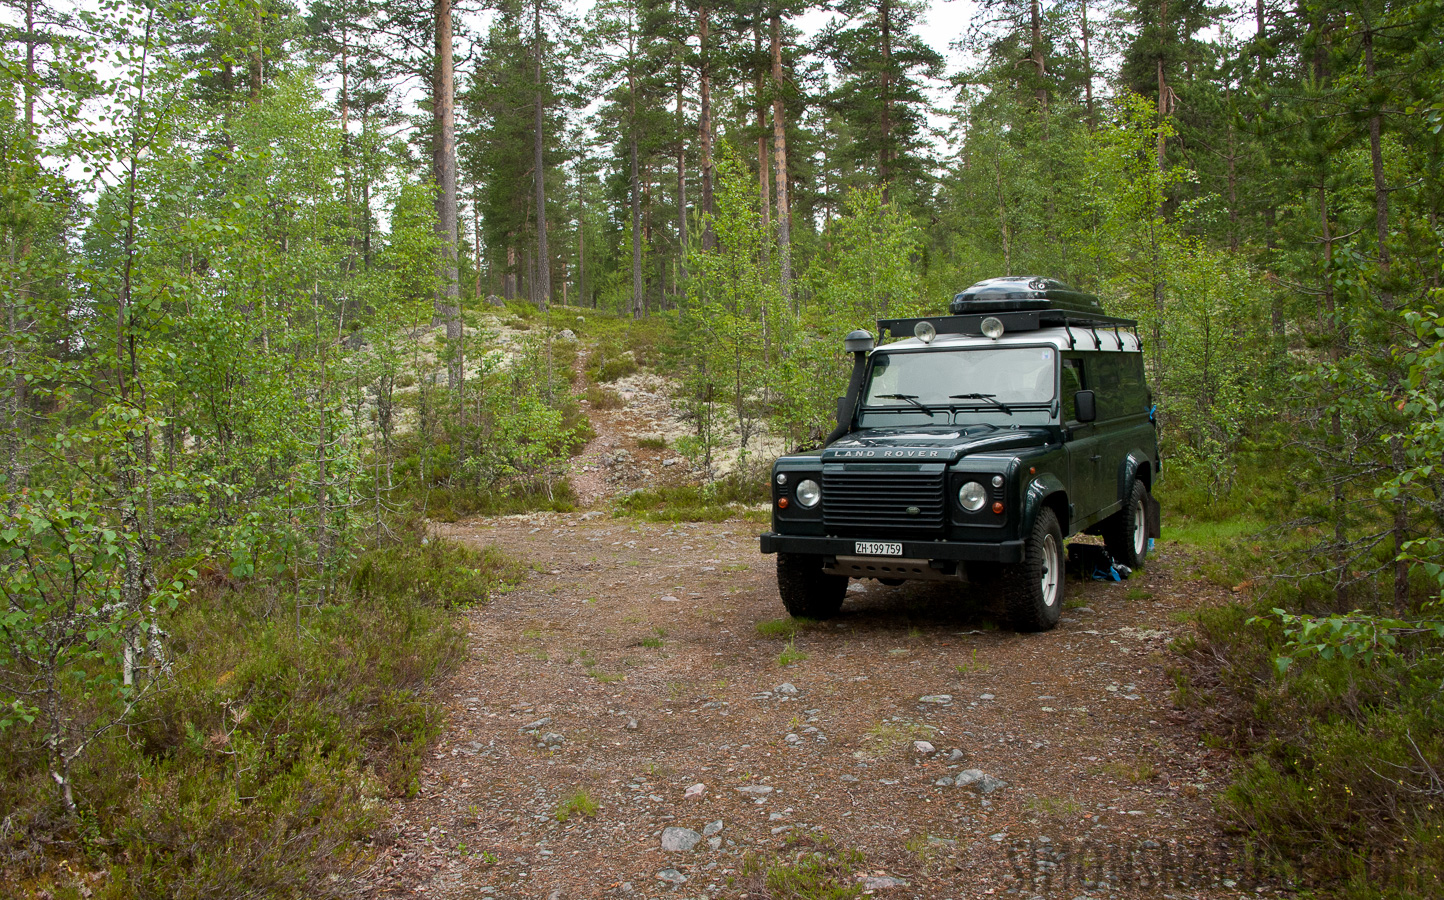 Schweden - Wilderness route [28 mm, 1/200 sec at f / 13, ISO 1600]